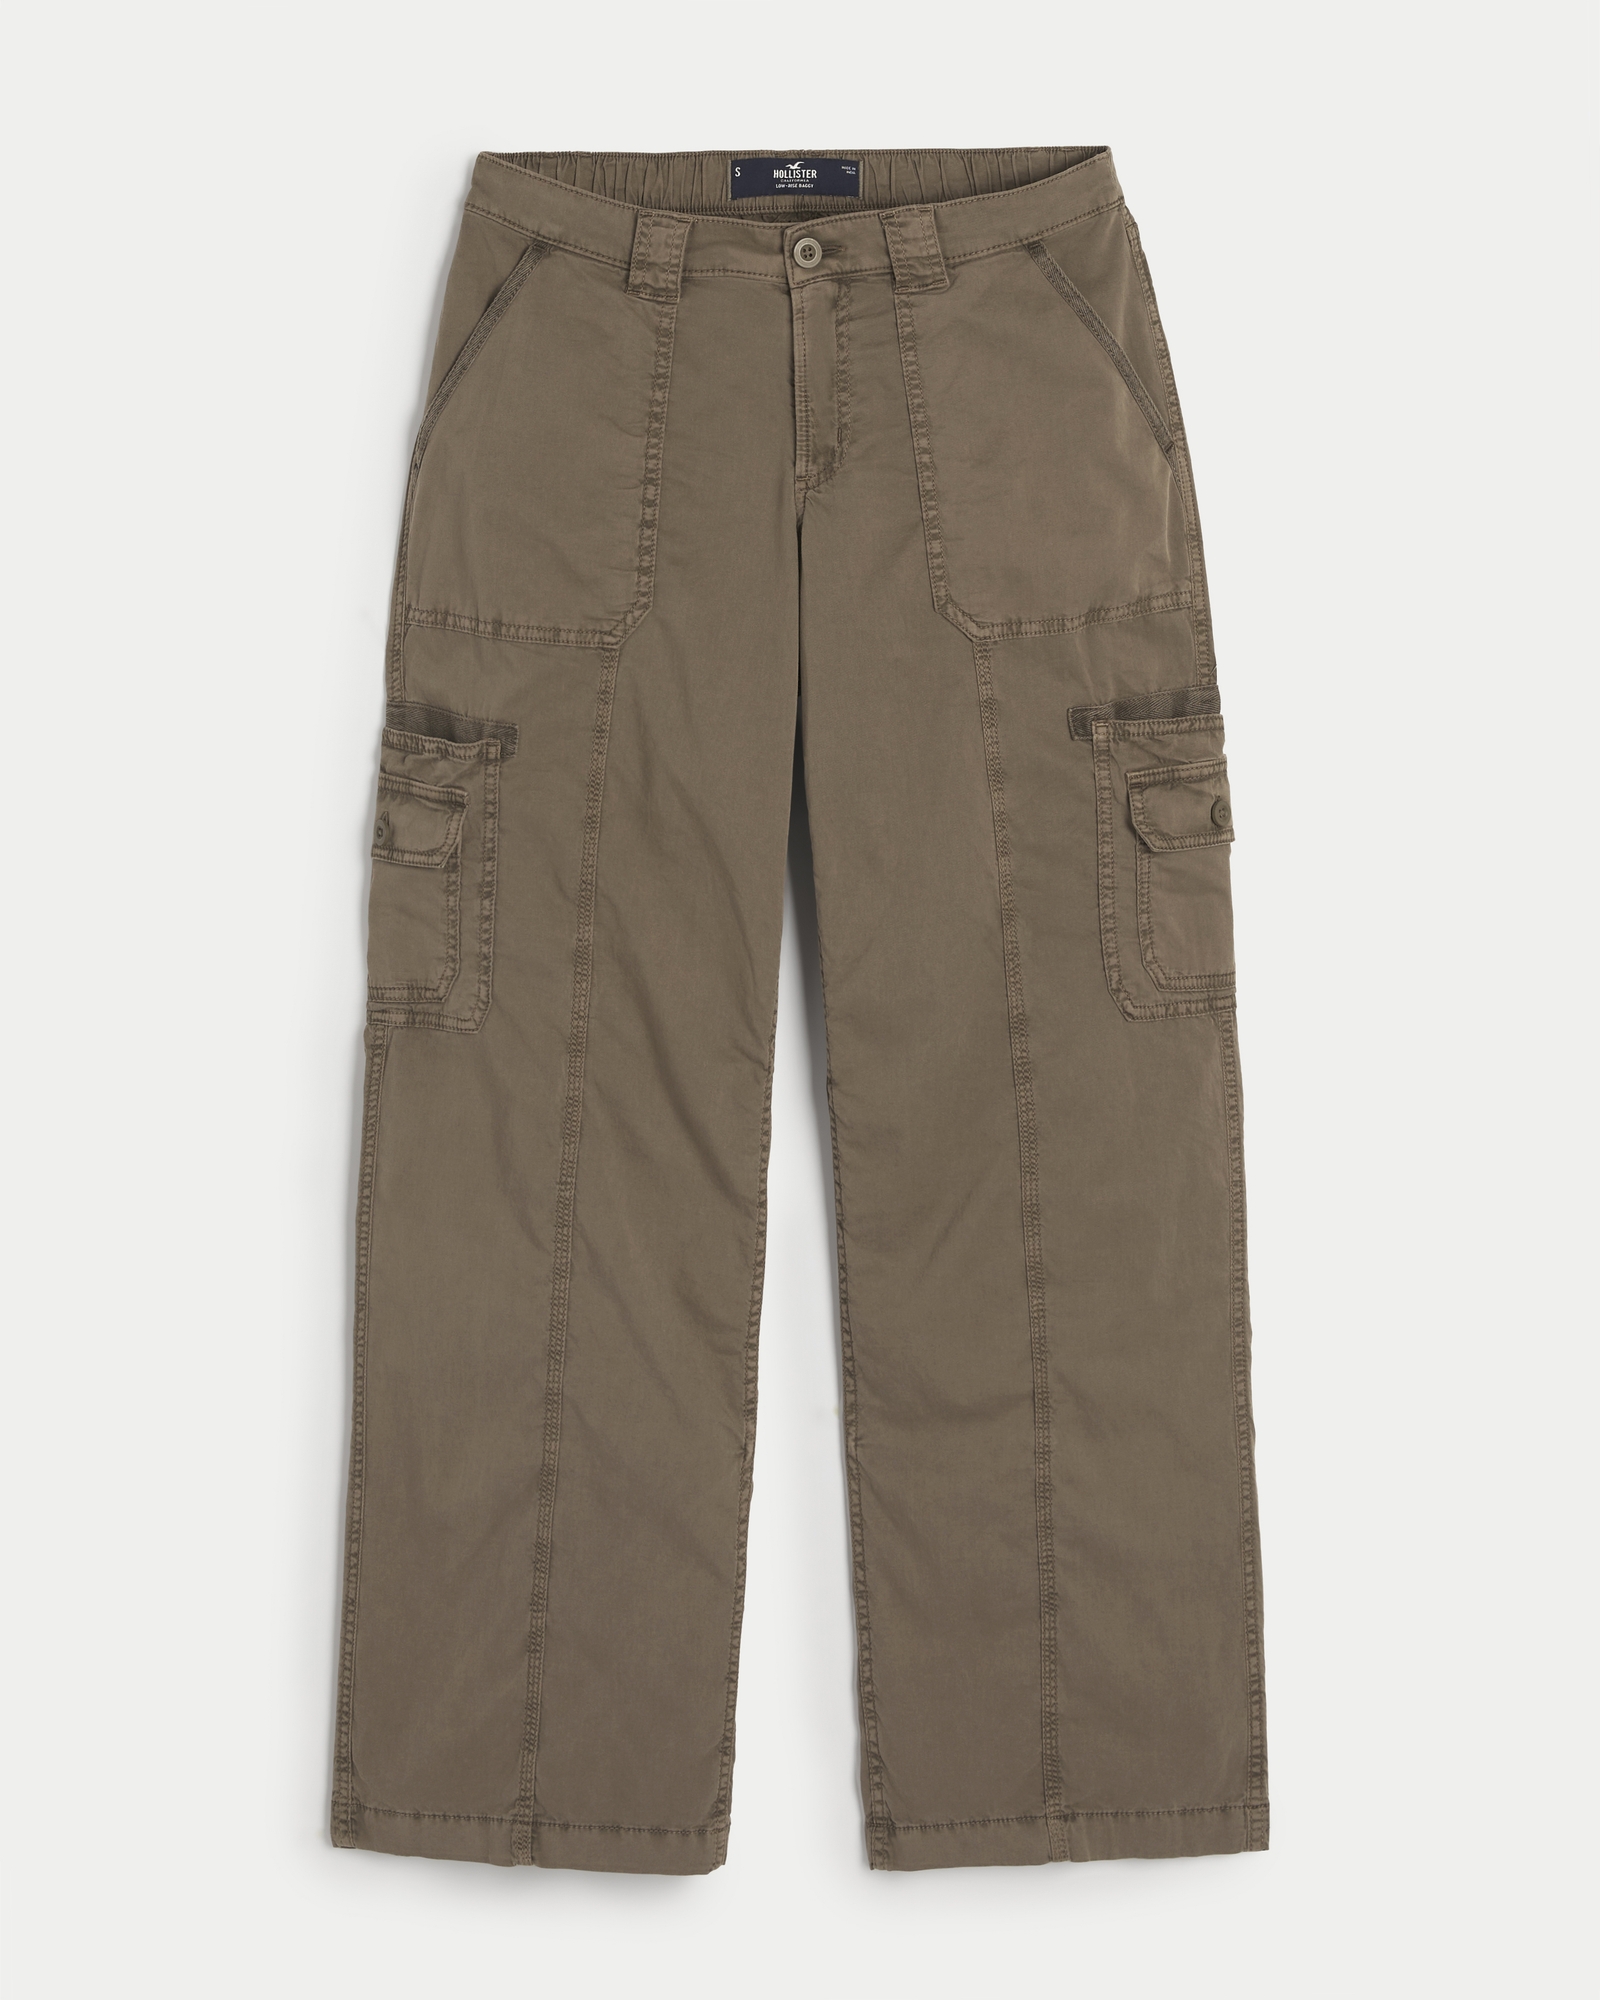 Hollister Co. Cargo Shorts for Men